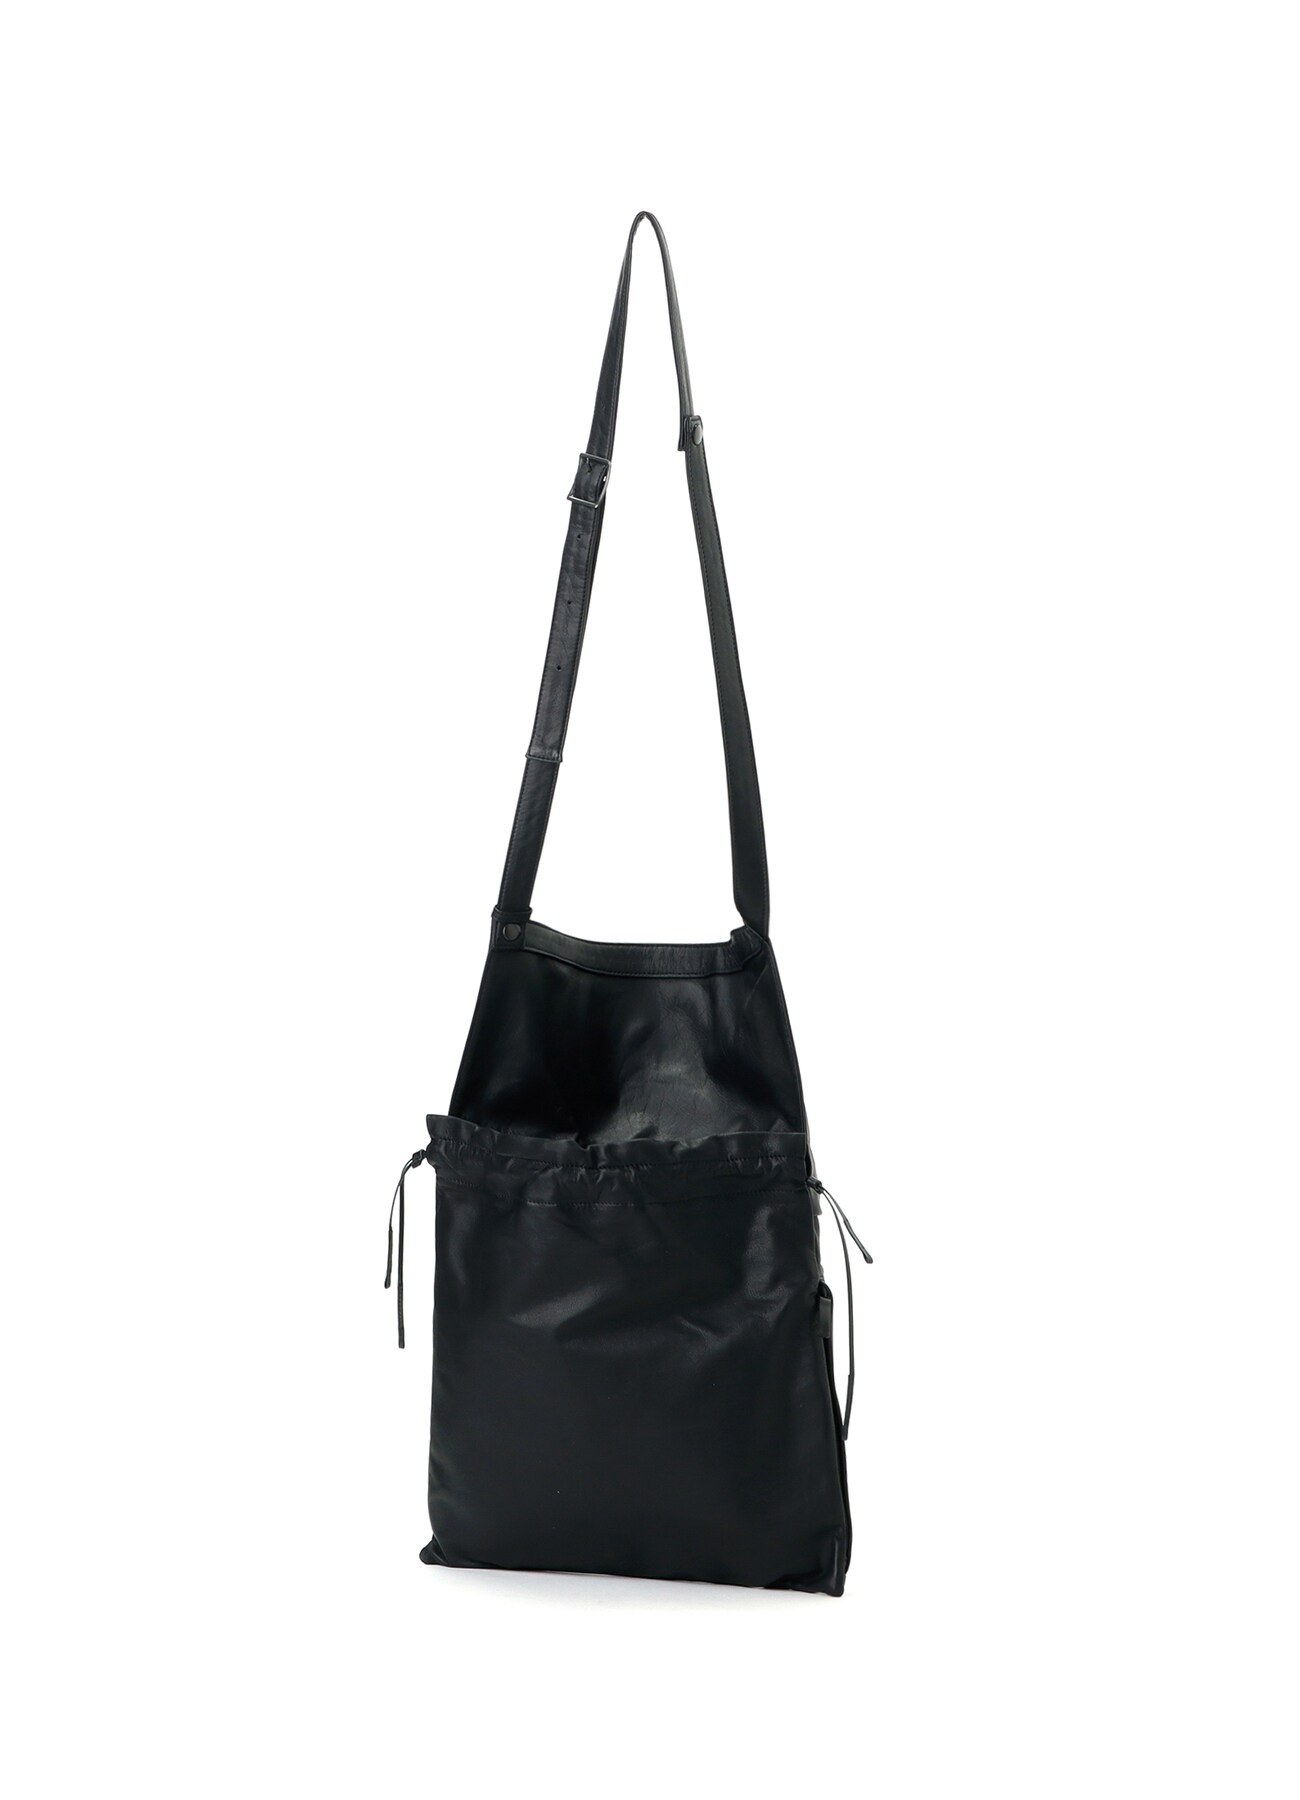 Black Canvas Messenger Bag Outfits (243 ideas & outfits)